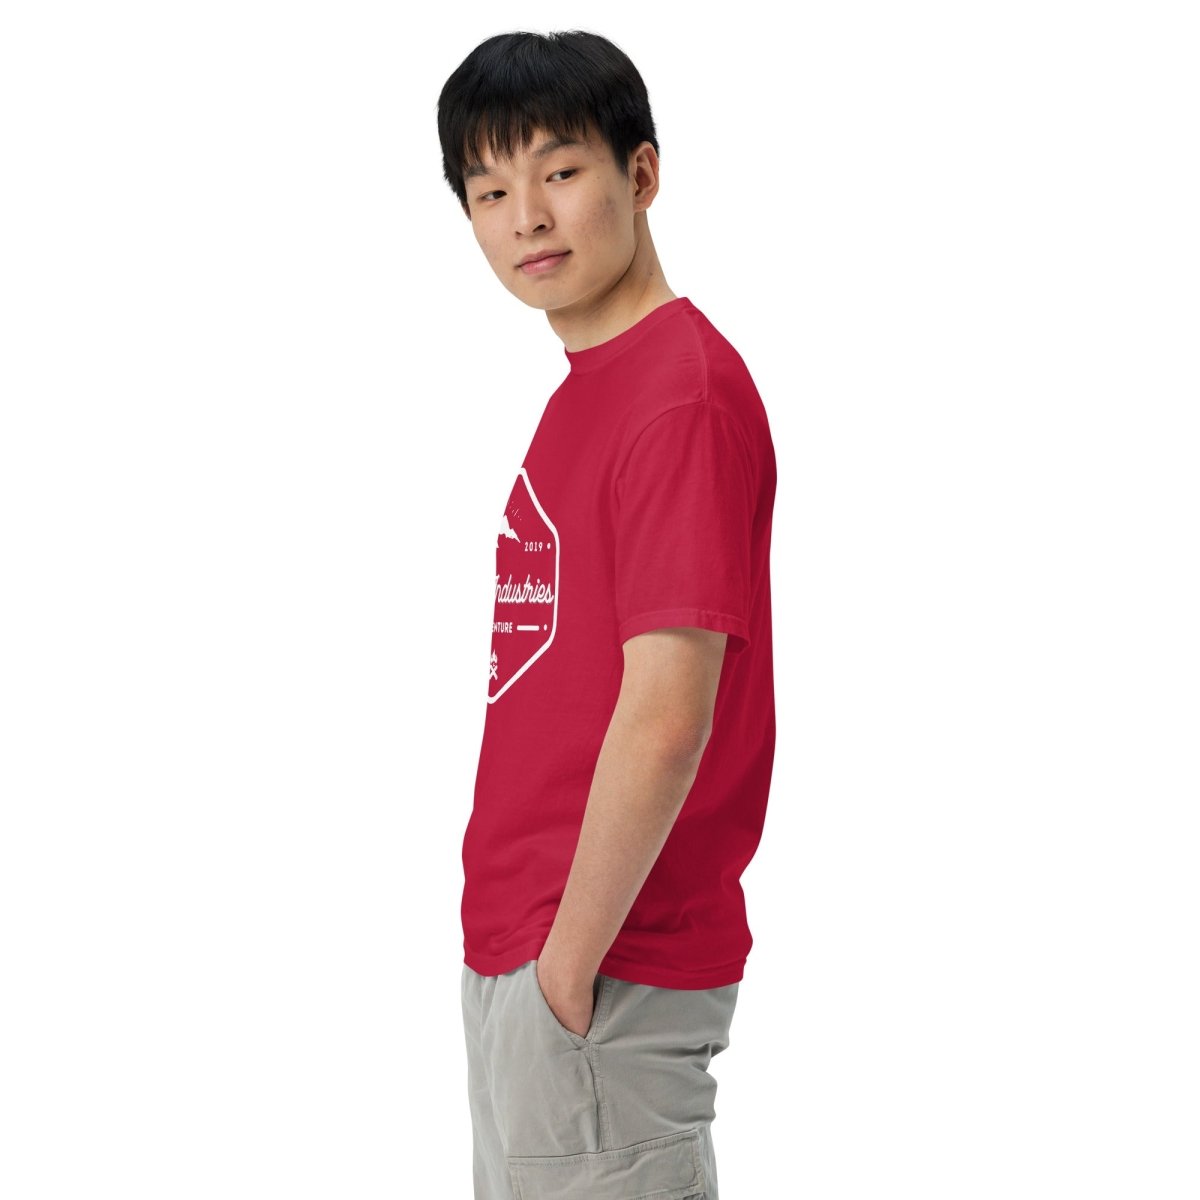 Unisex garment-dyed heavyweight t-shirt - Wifler Industries--Wifler Industries-3408529_15119--Red-S--Unisex garment-dyed